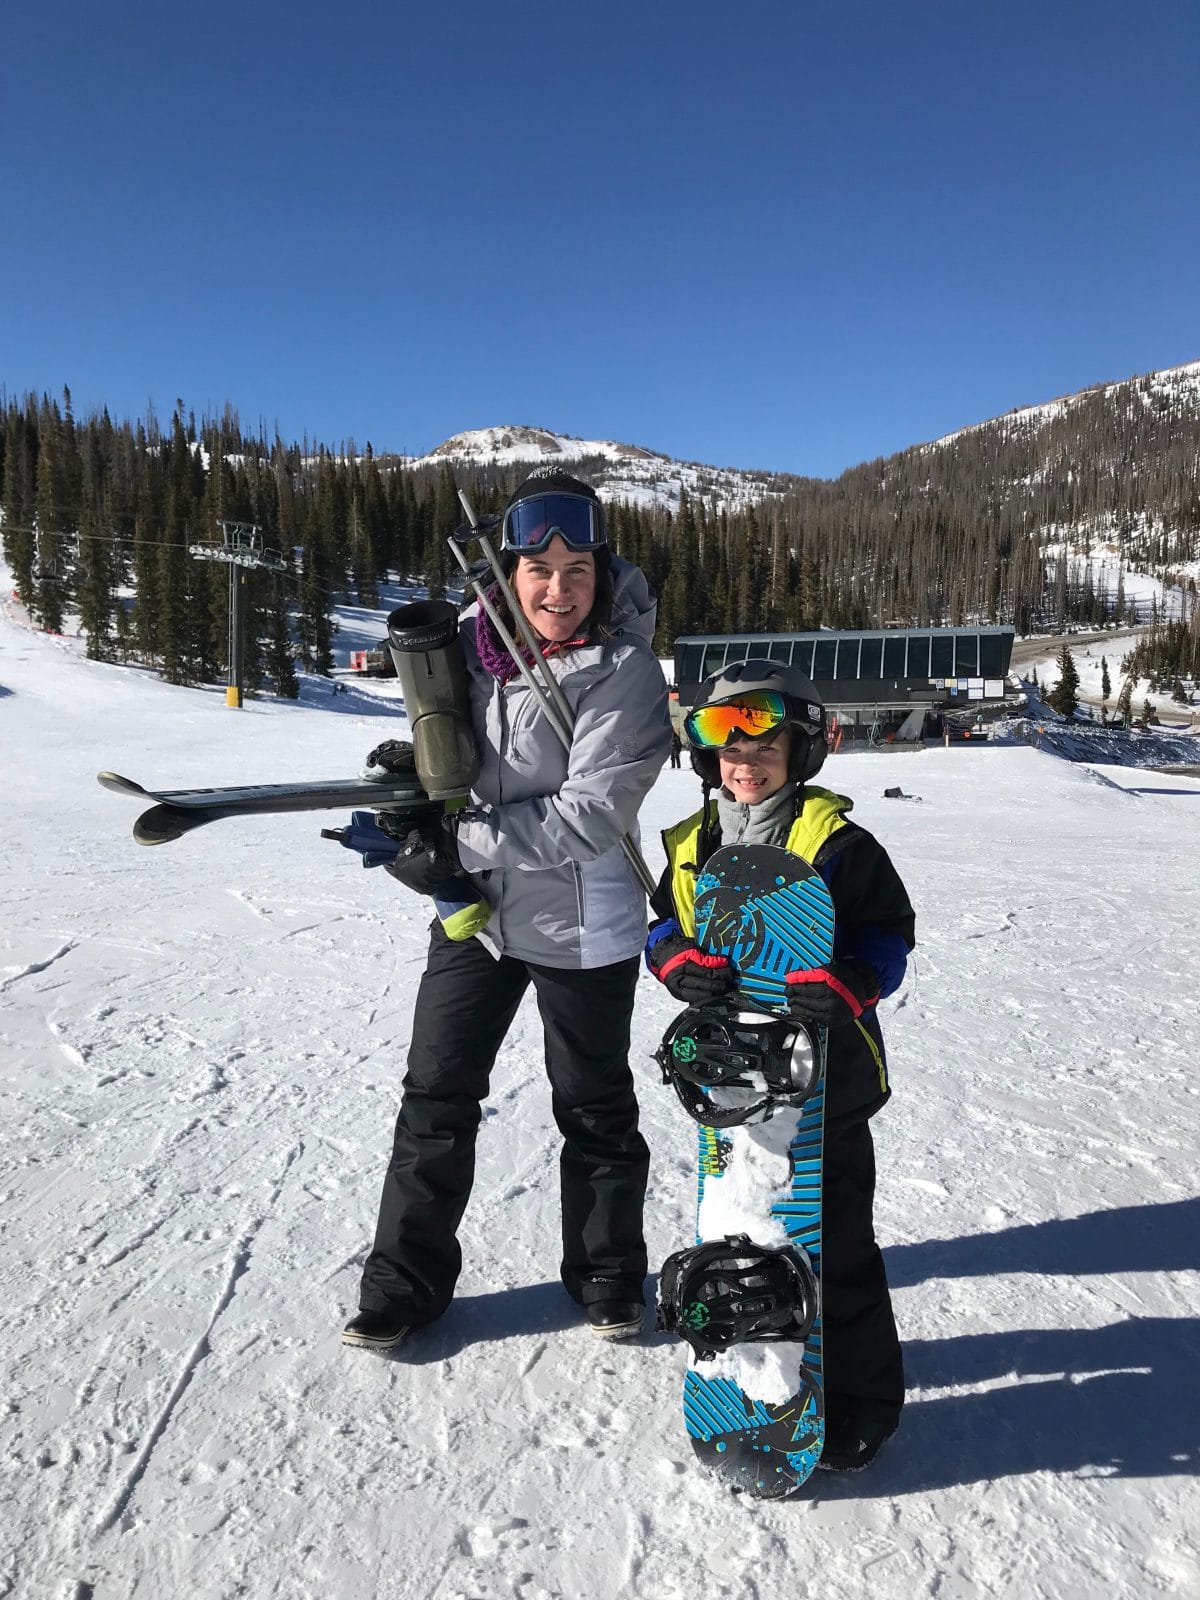 Family ski trip with toddler - snowboarding 